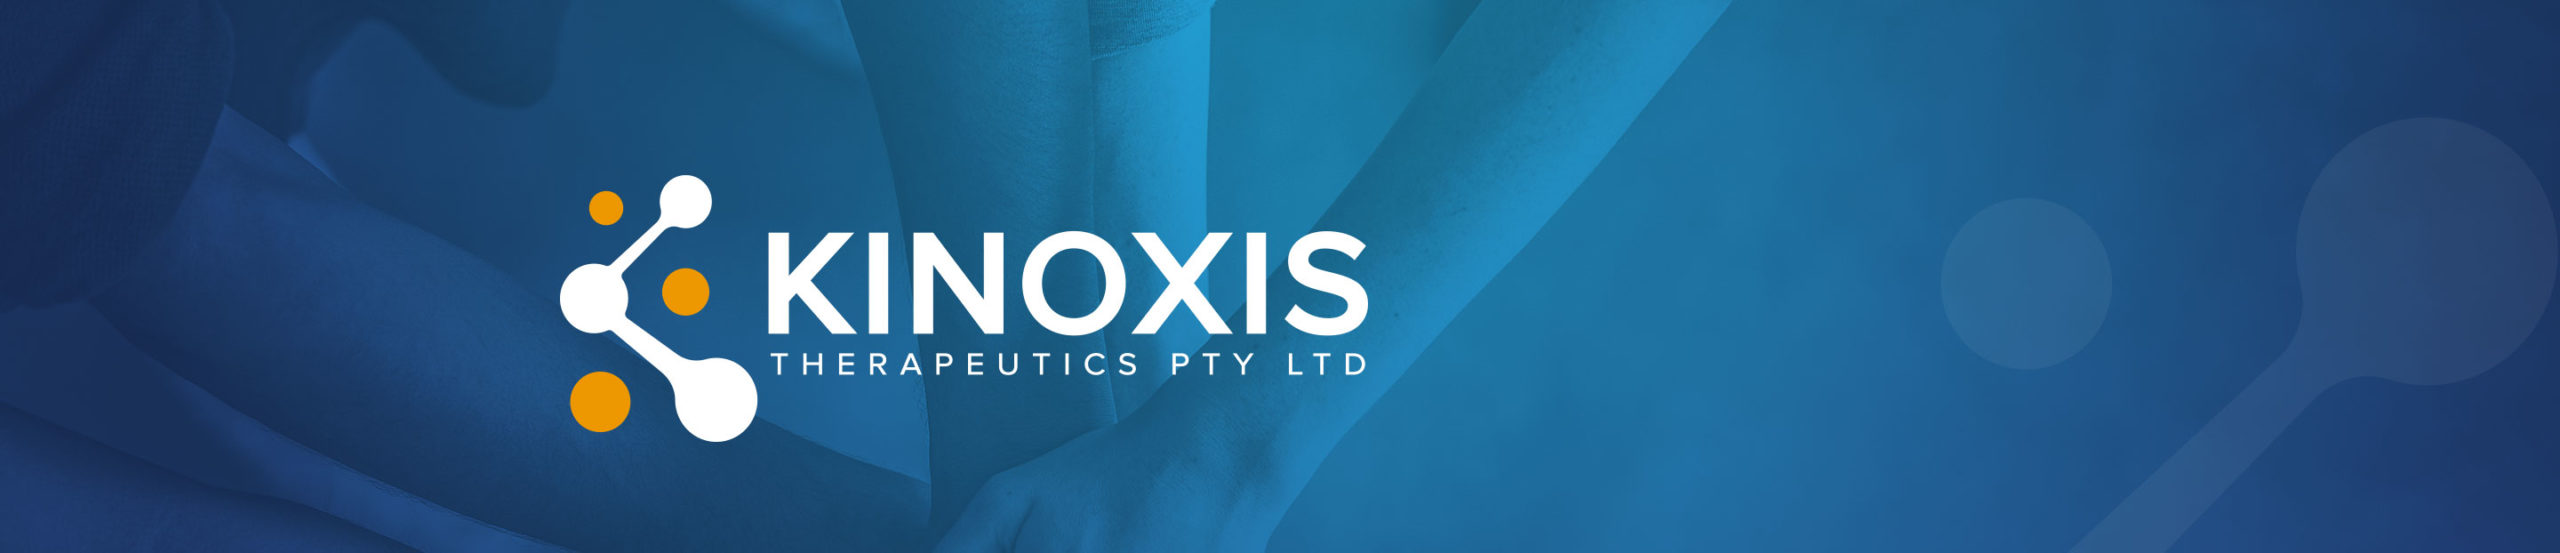 Kinoxis Therapeutics Pty Ltd.